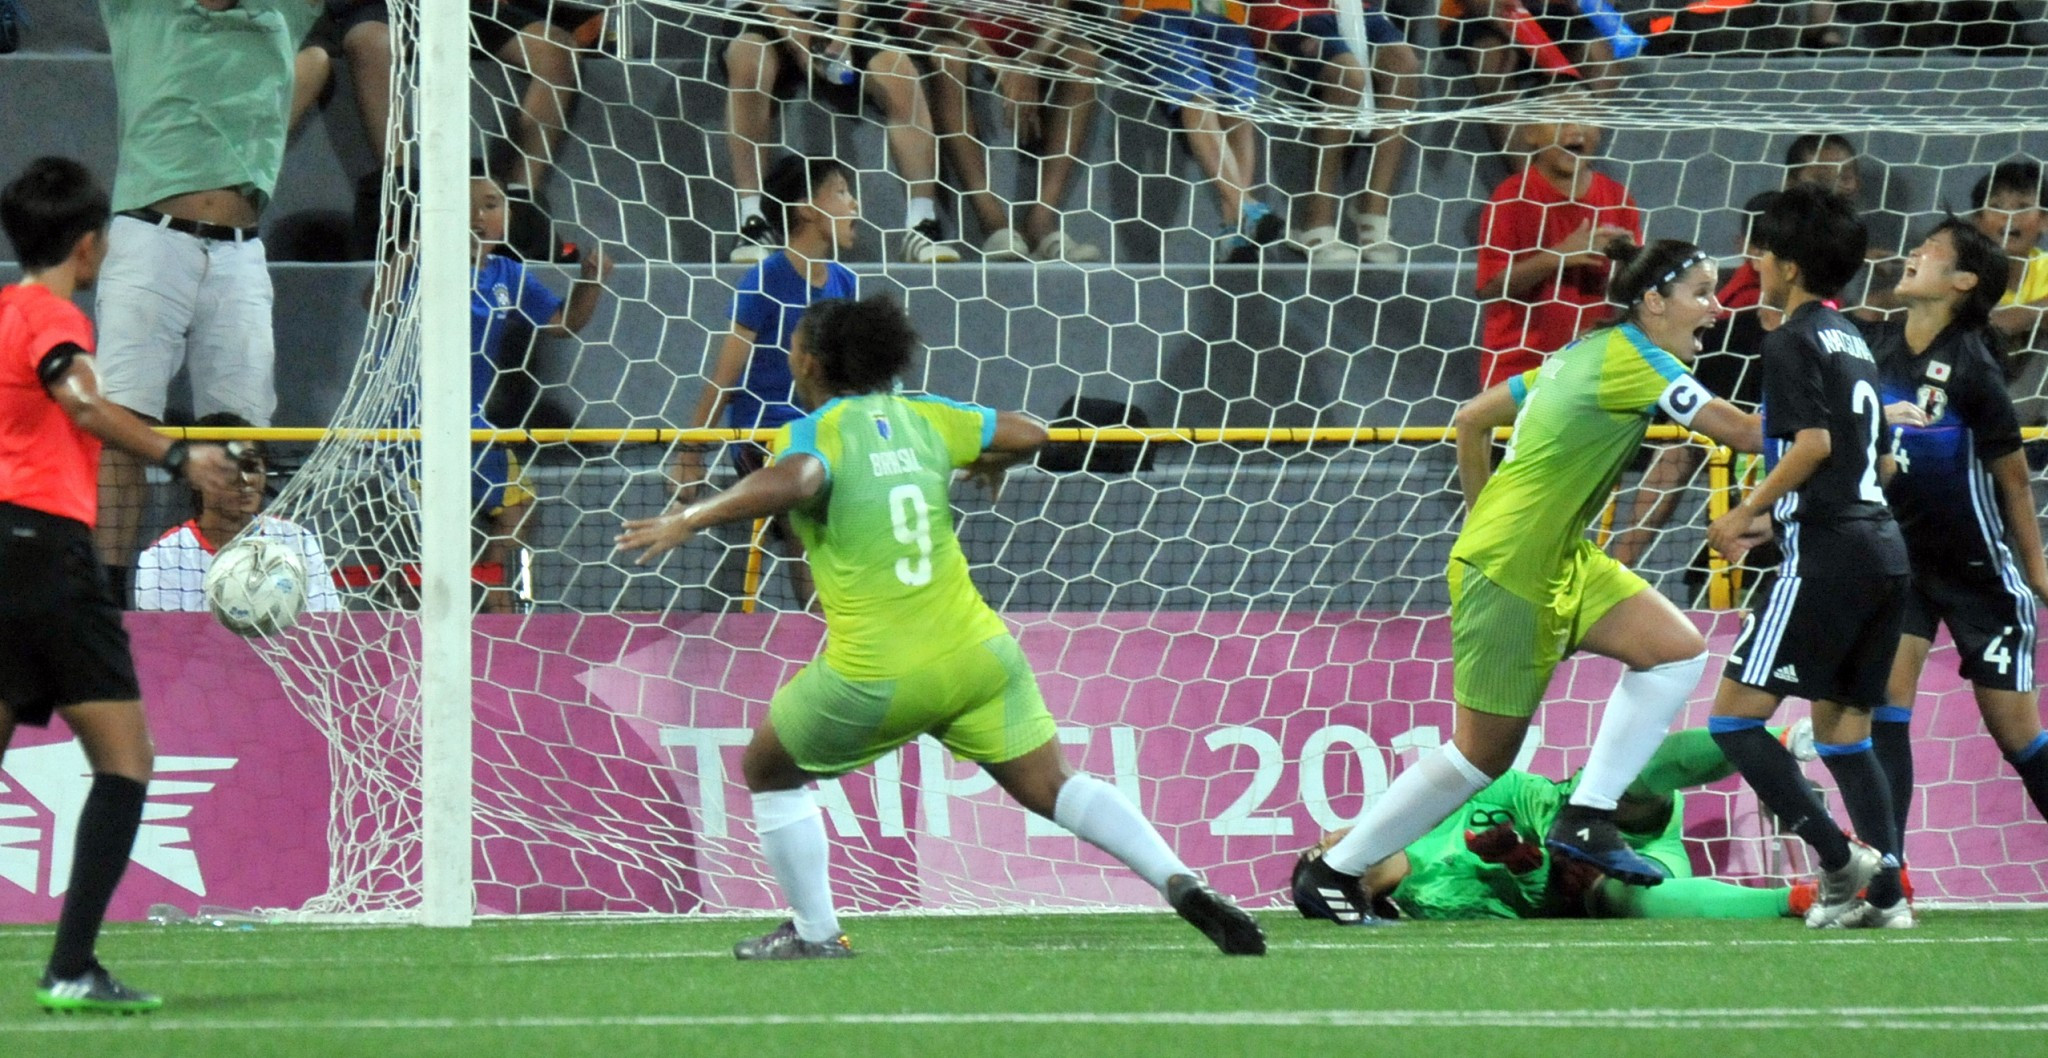 Diany Aparecida Martins scored the winner for Brazil in the women's football final ©Taipei 2017